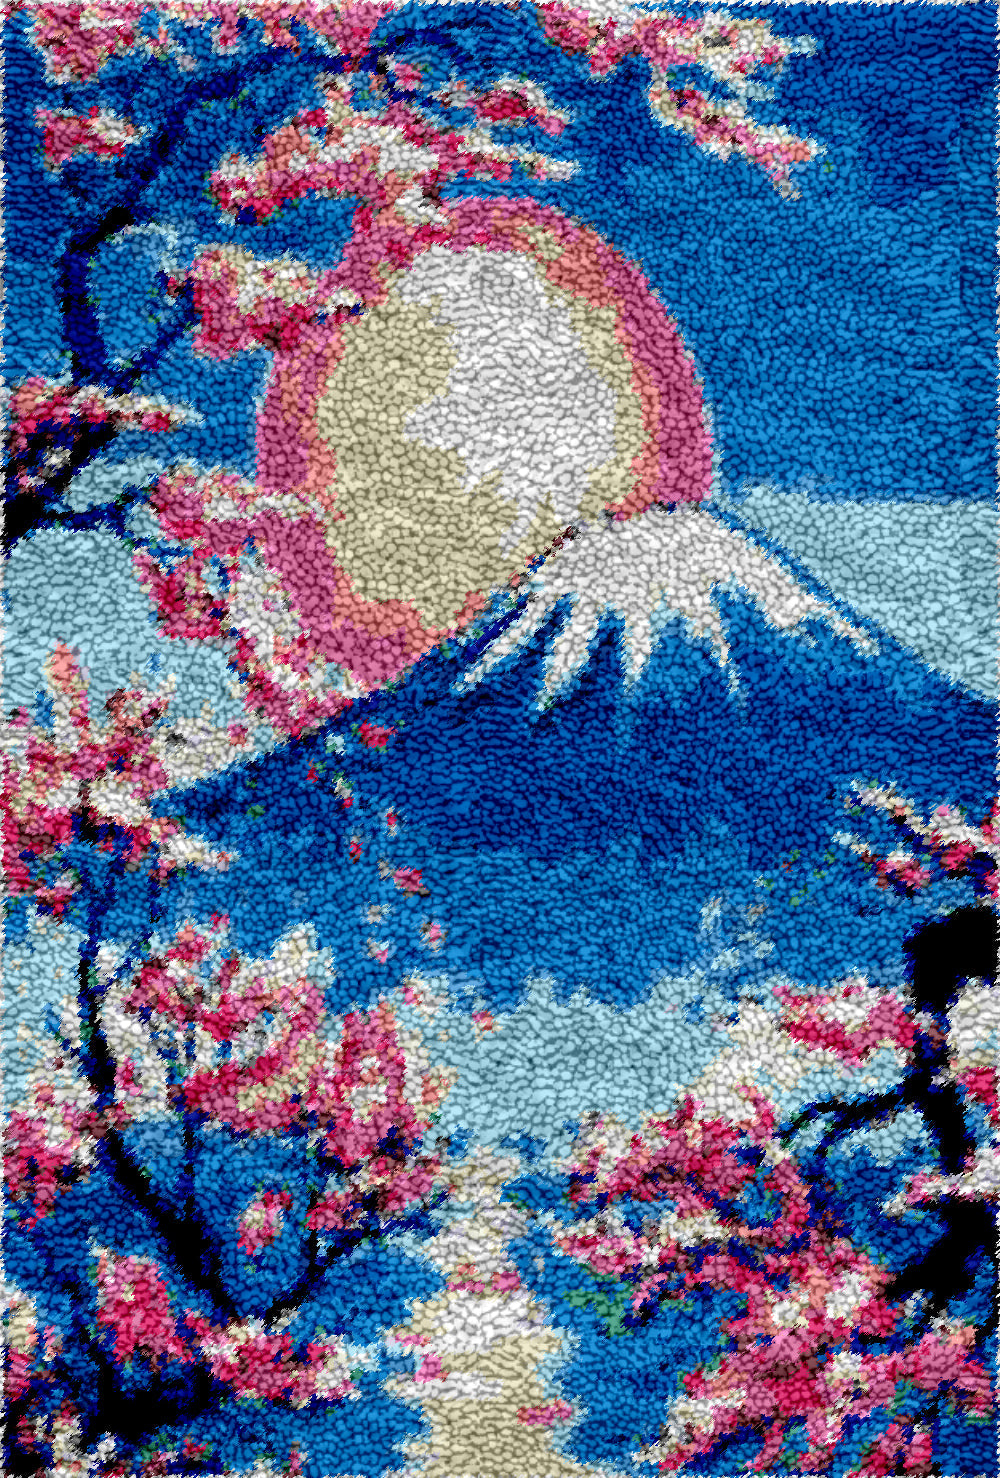 Great Mount Fuji Latch Hook Rug by Heartful Crafts